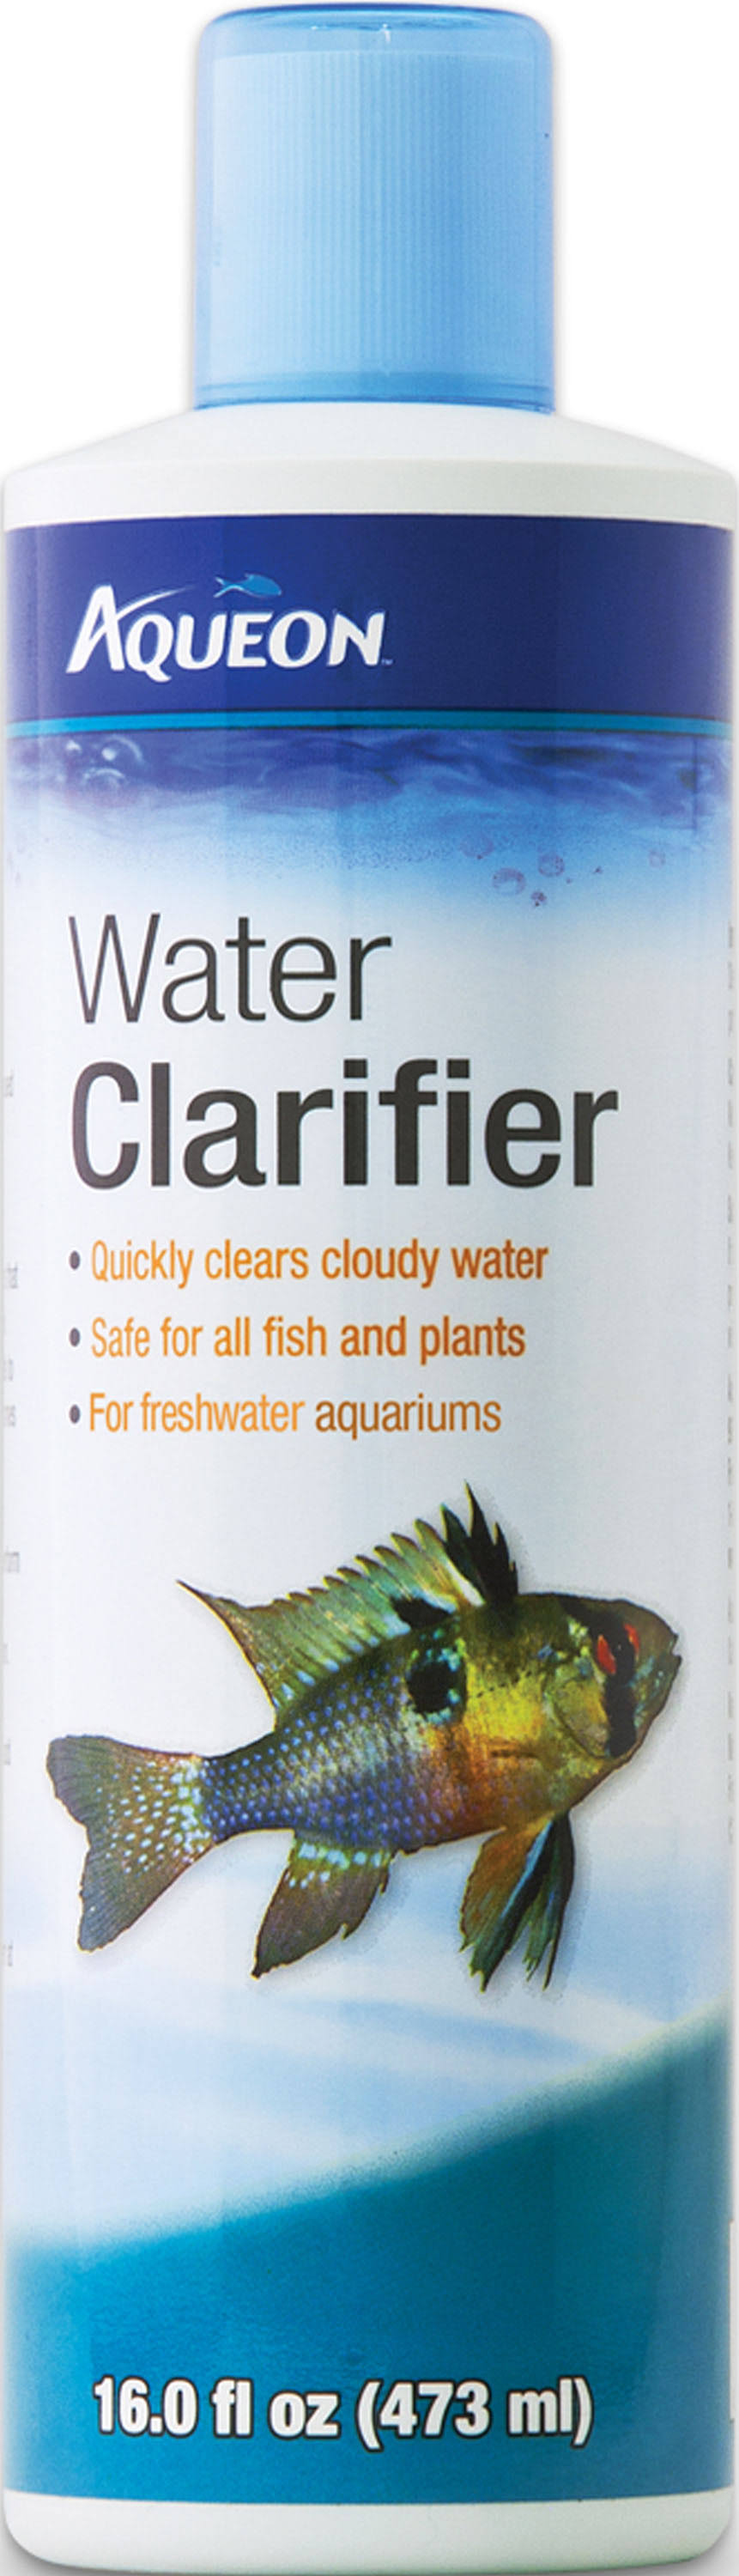 Aqueon Water Clarifier - 16oz